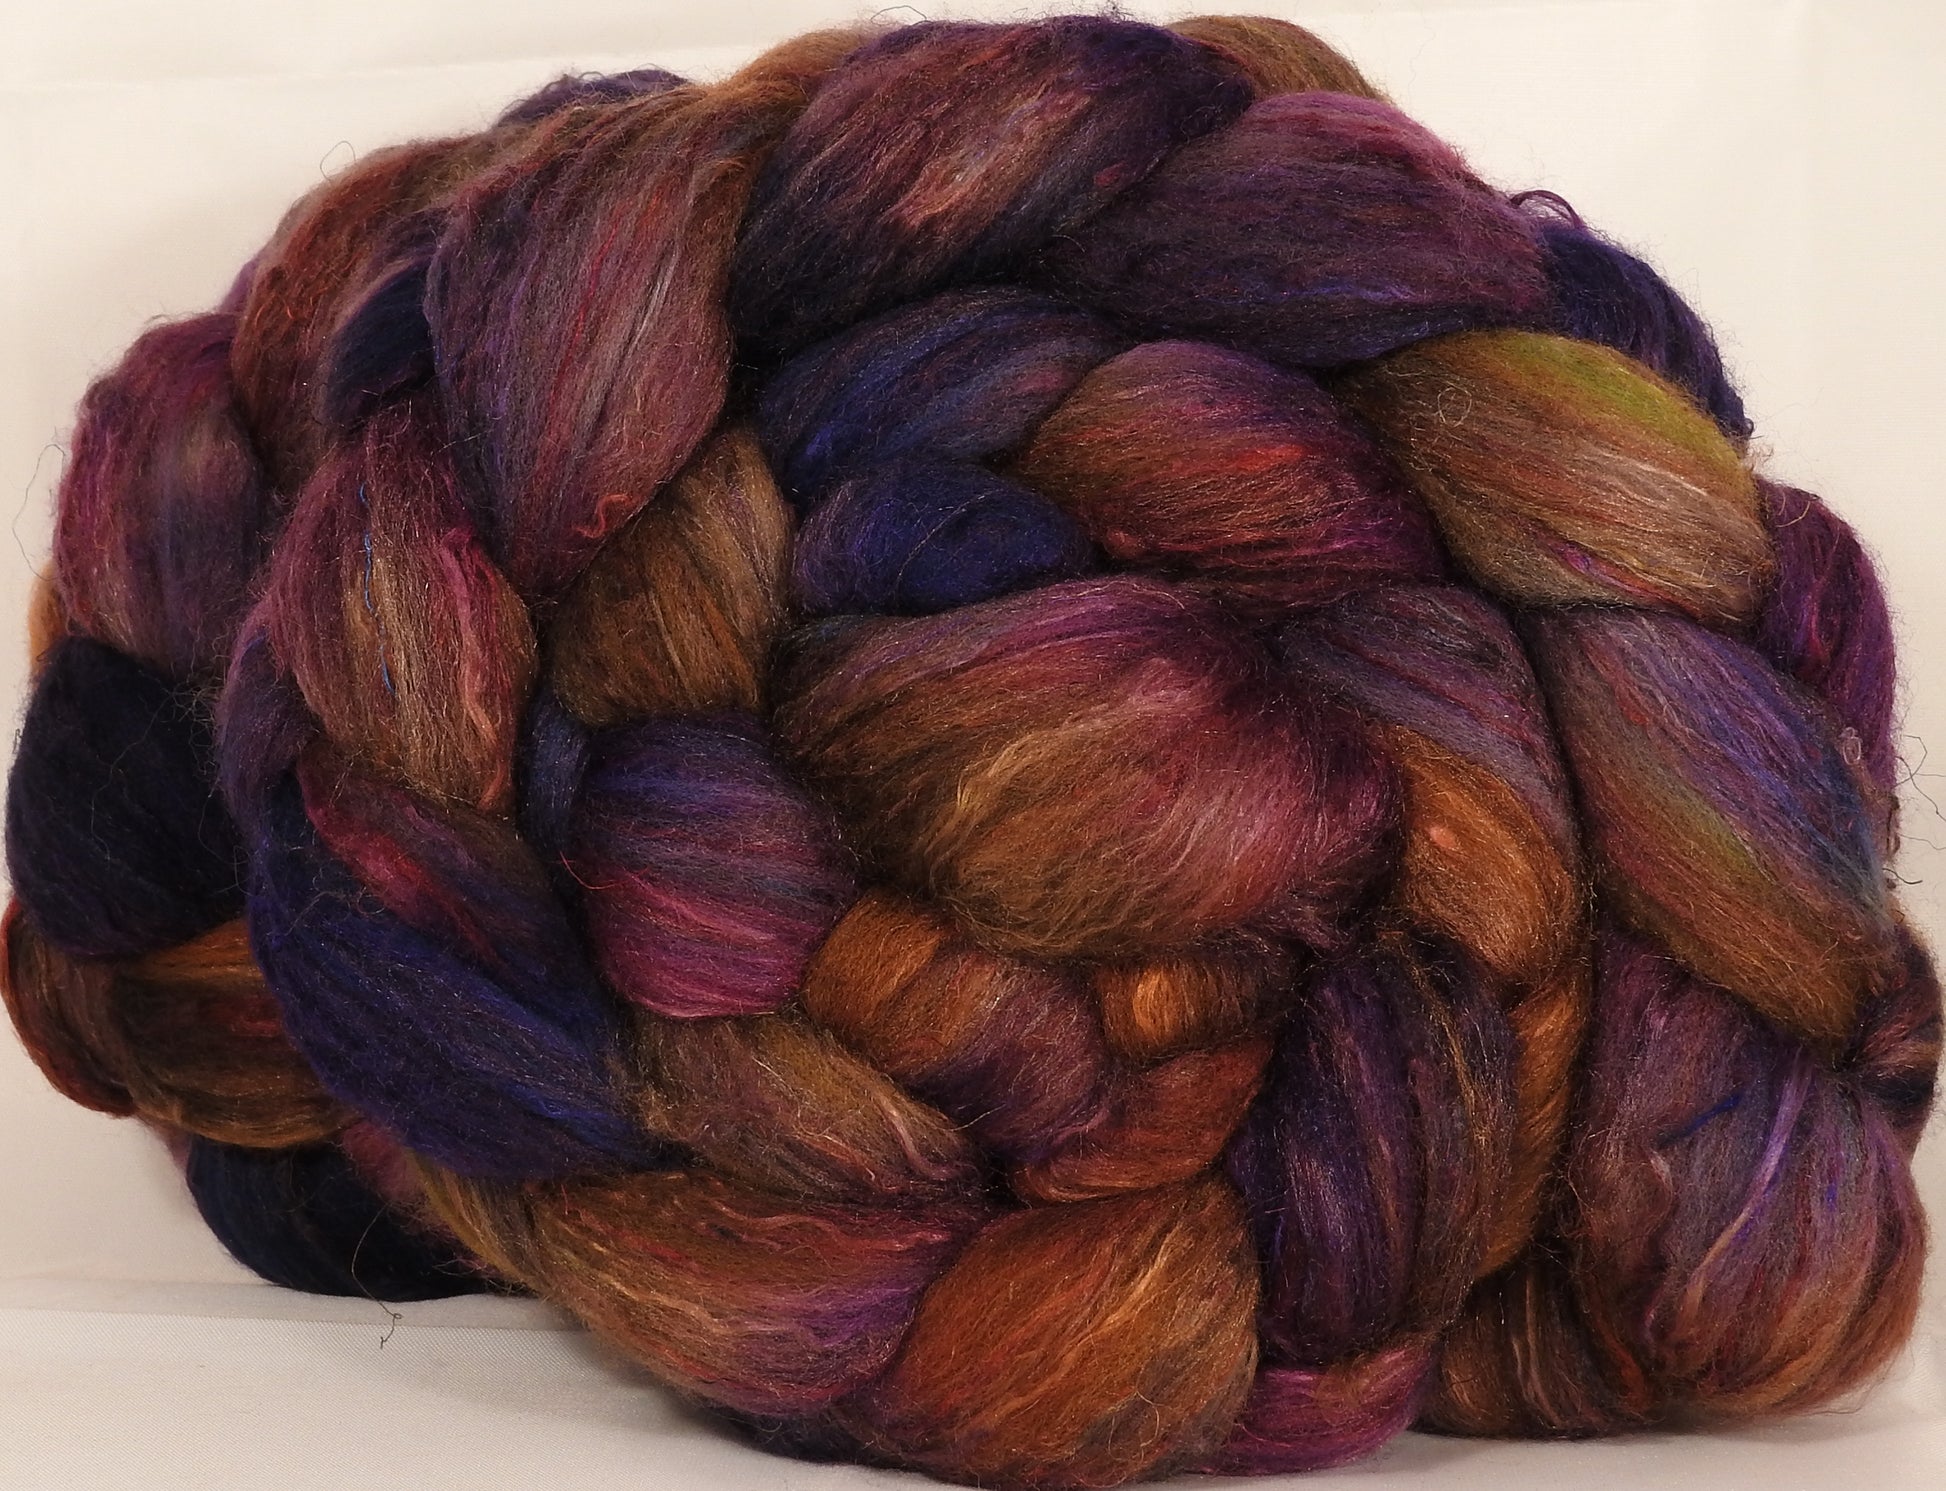 Batt in a Braid #39-SARI-27-Falkland Merino/ Mulberry Silk / Sari Silk (50/25/25) - Inglenook Fibers